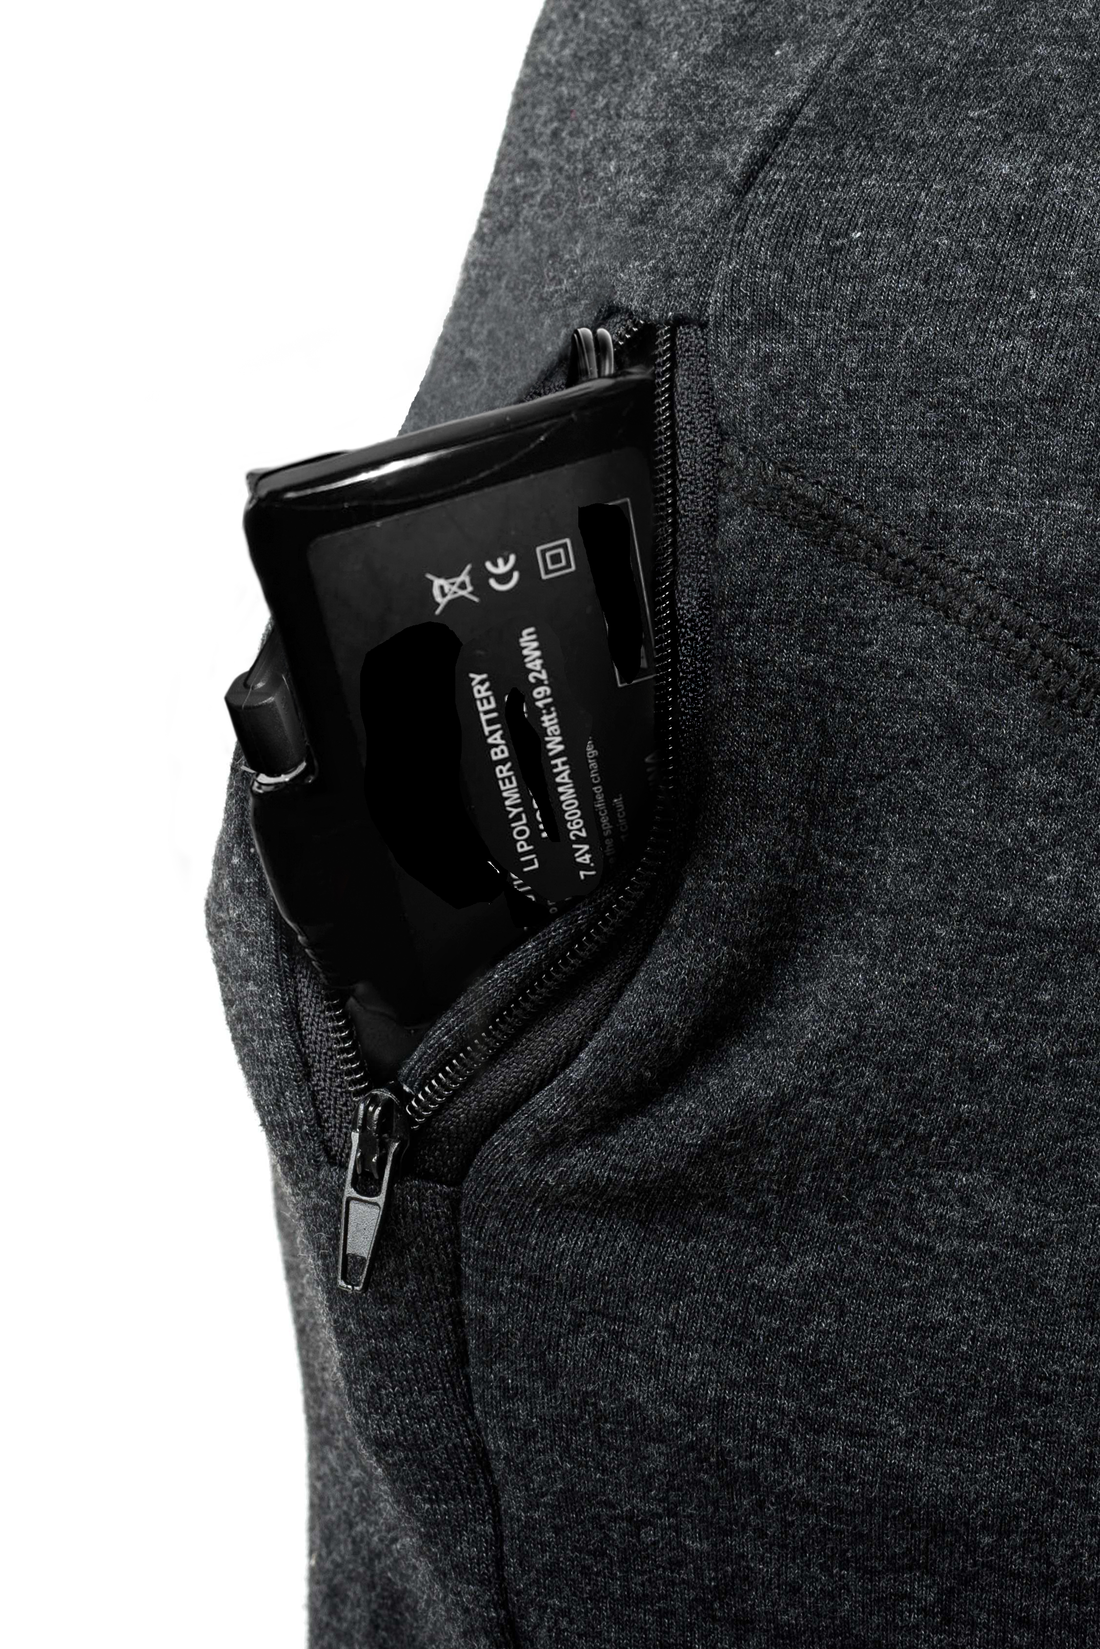 Heated Pants PRO  – free batterie | USB